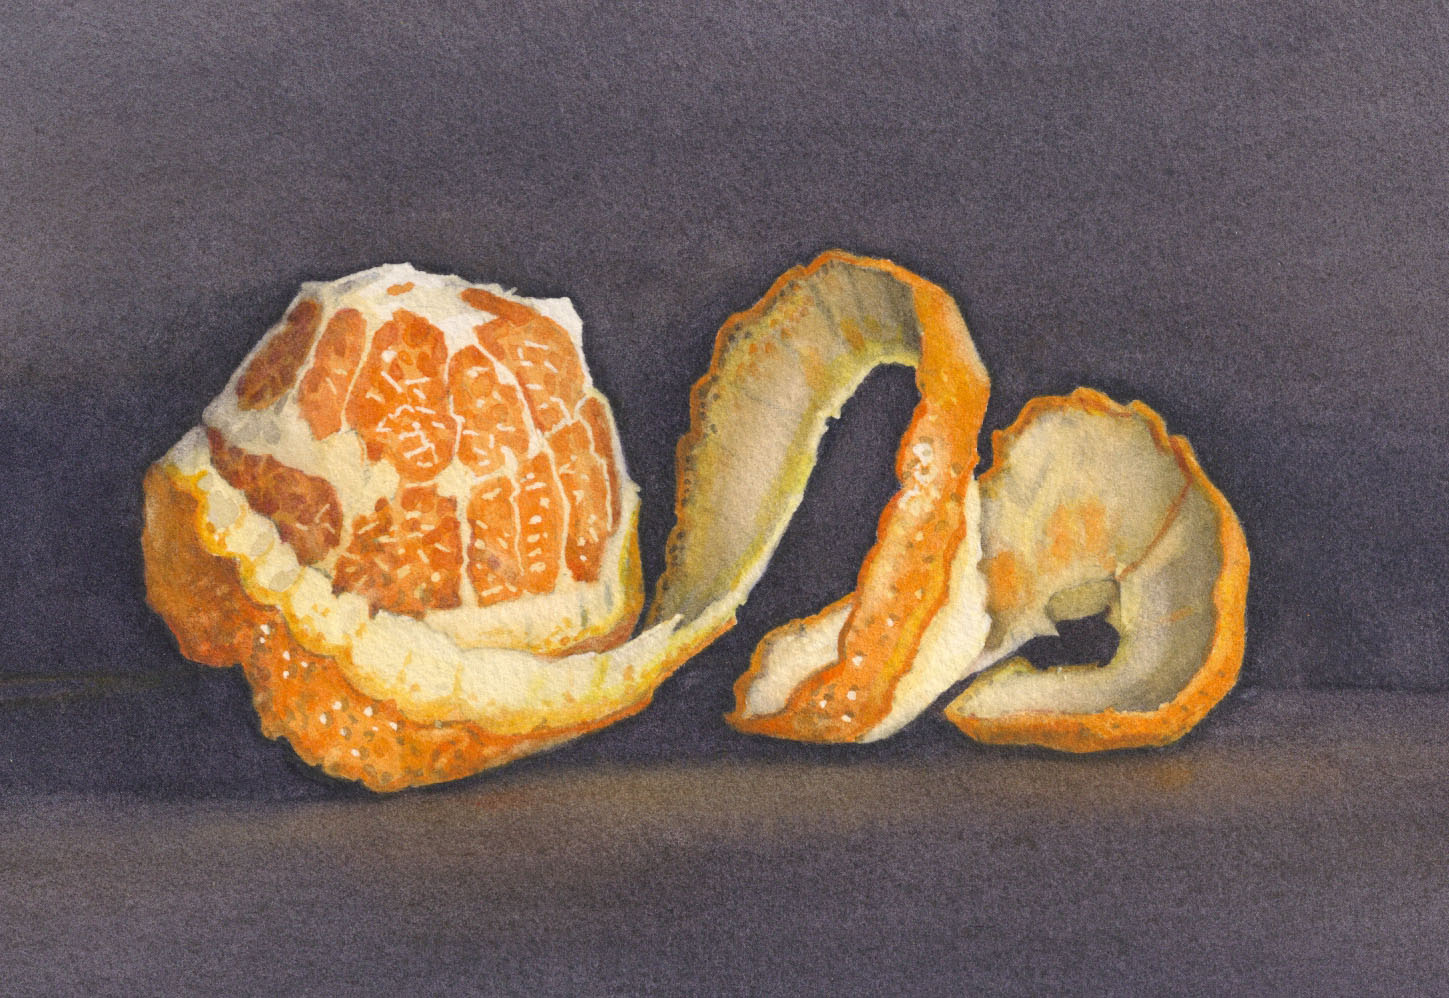 Orange peel, gicleé print 11.5 x 16.7cm